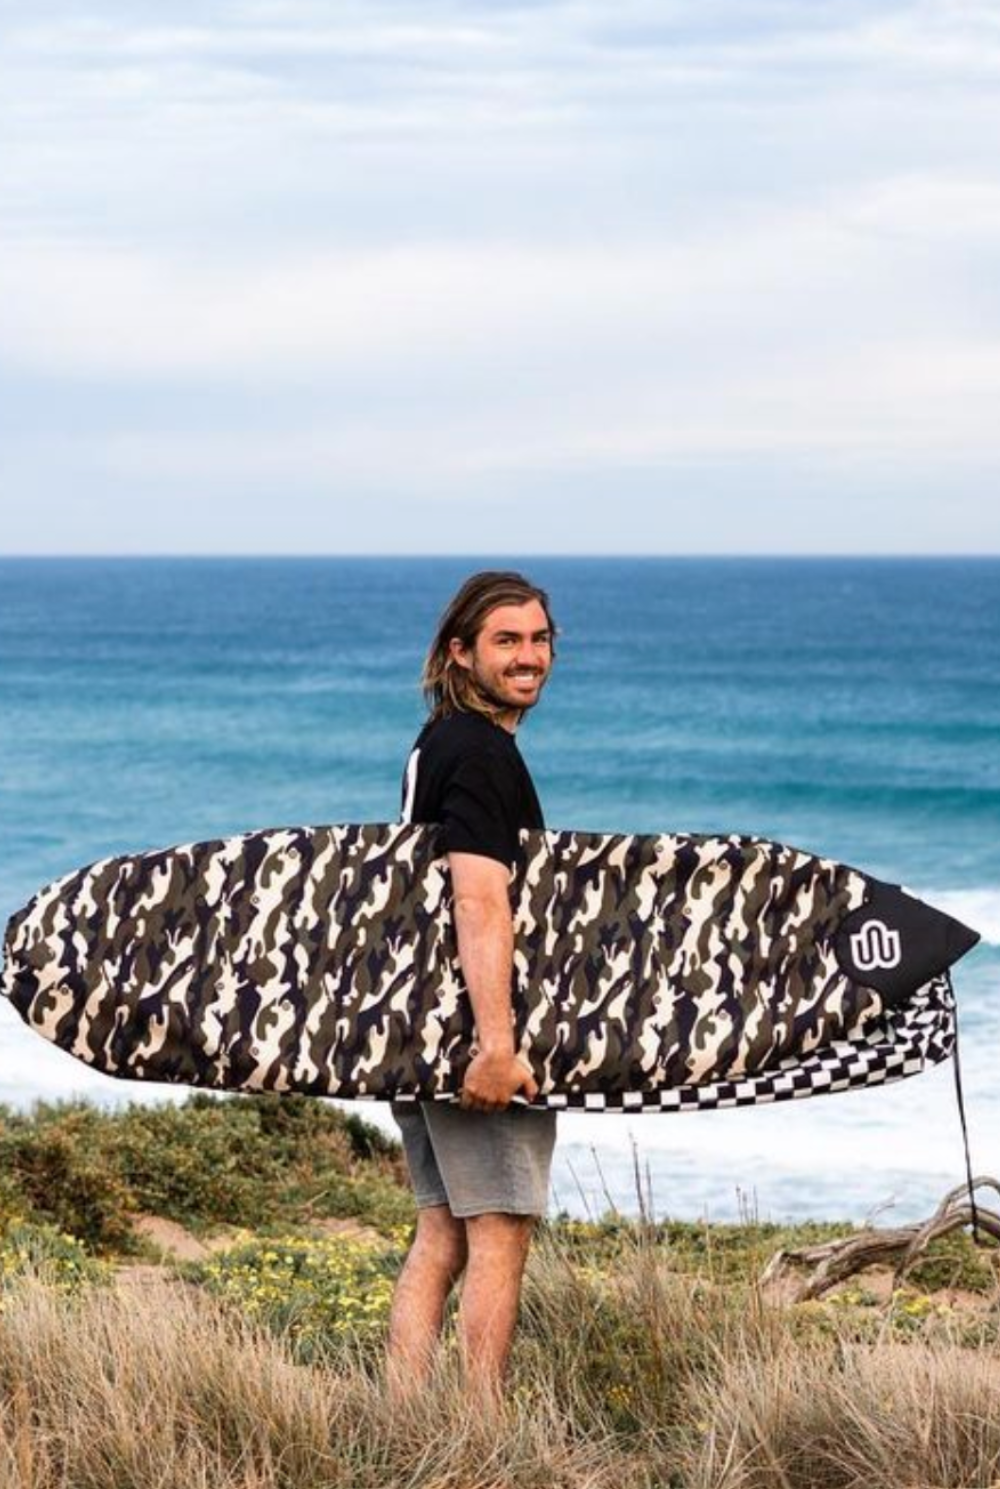 Camo Shortboard Surfboard Cover